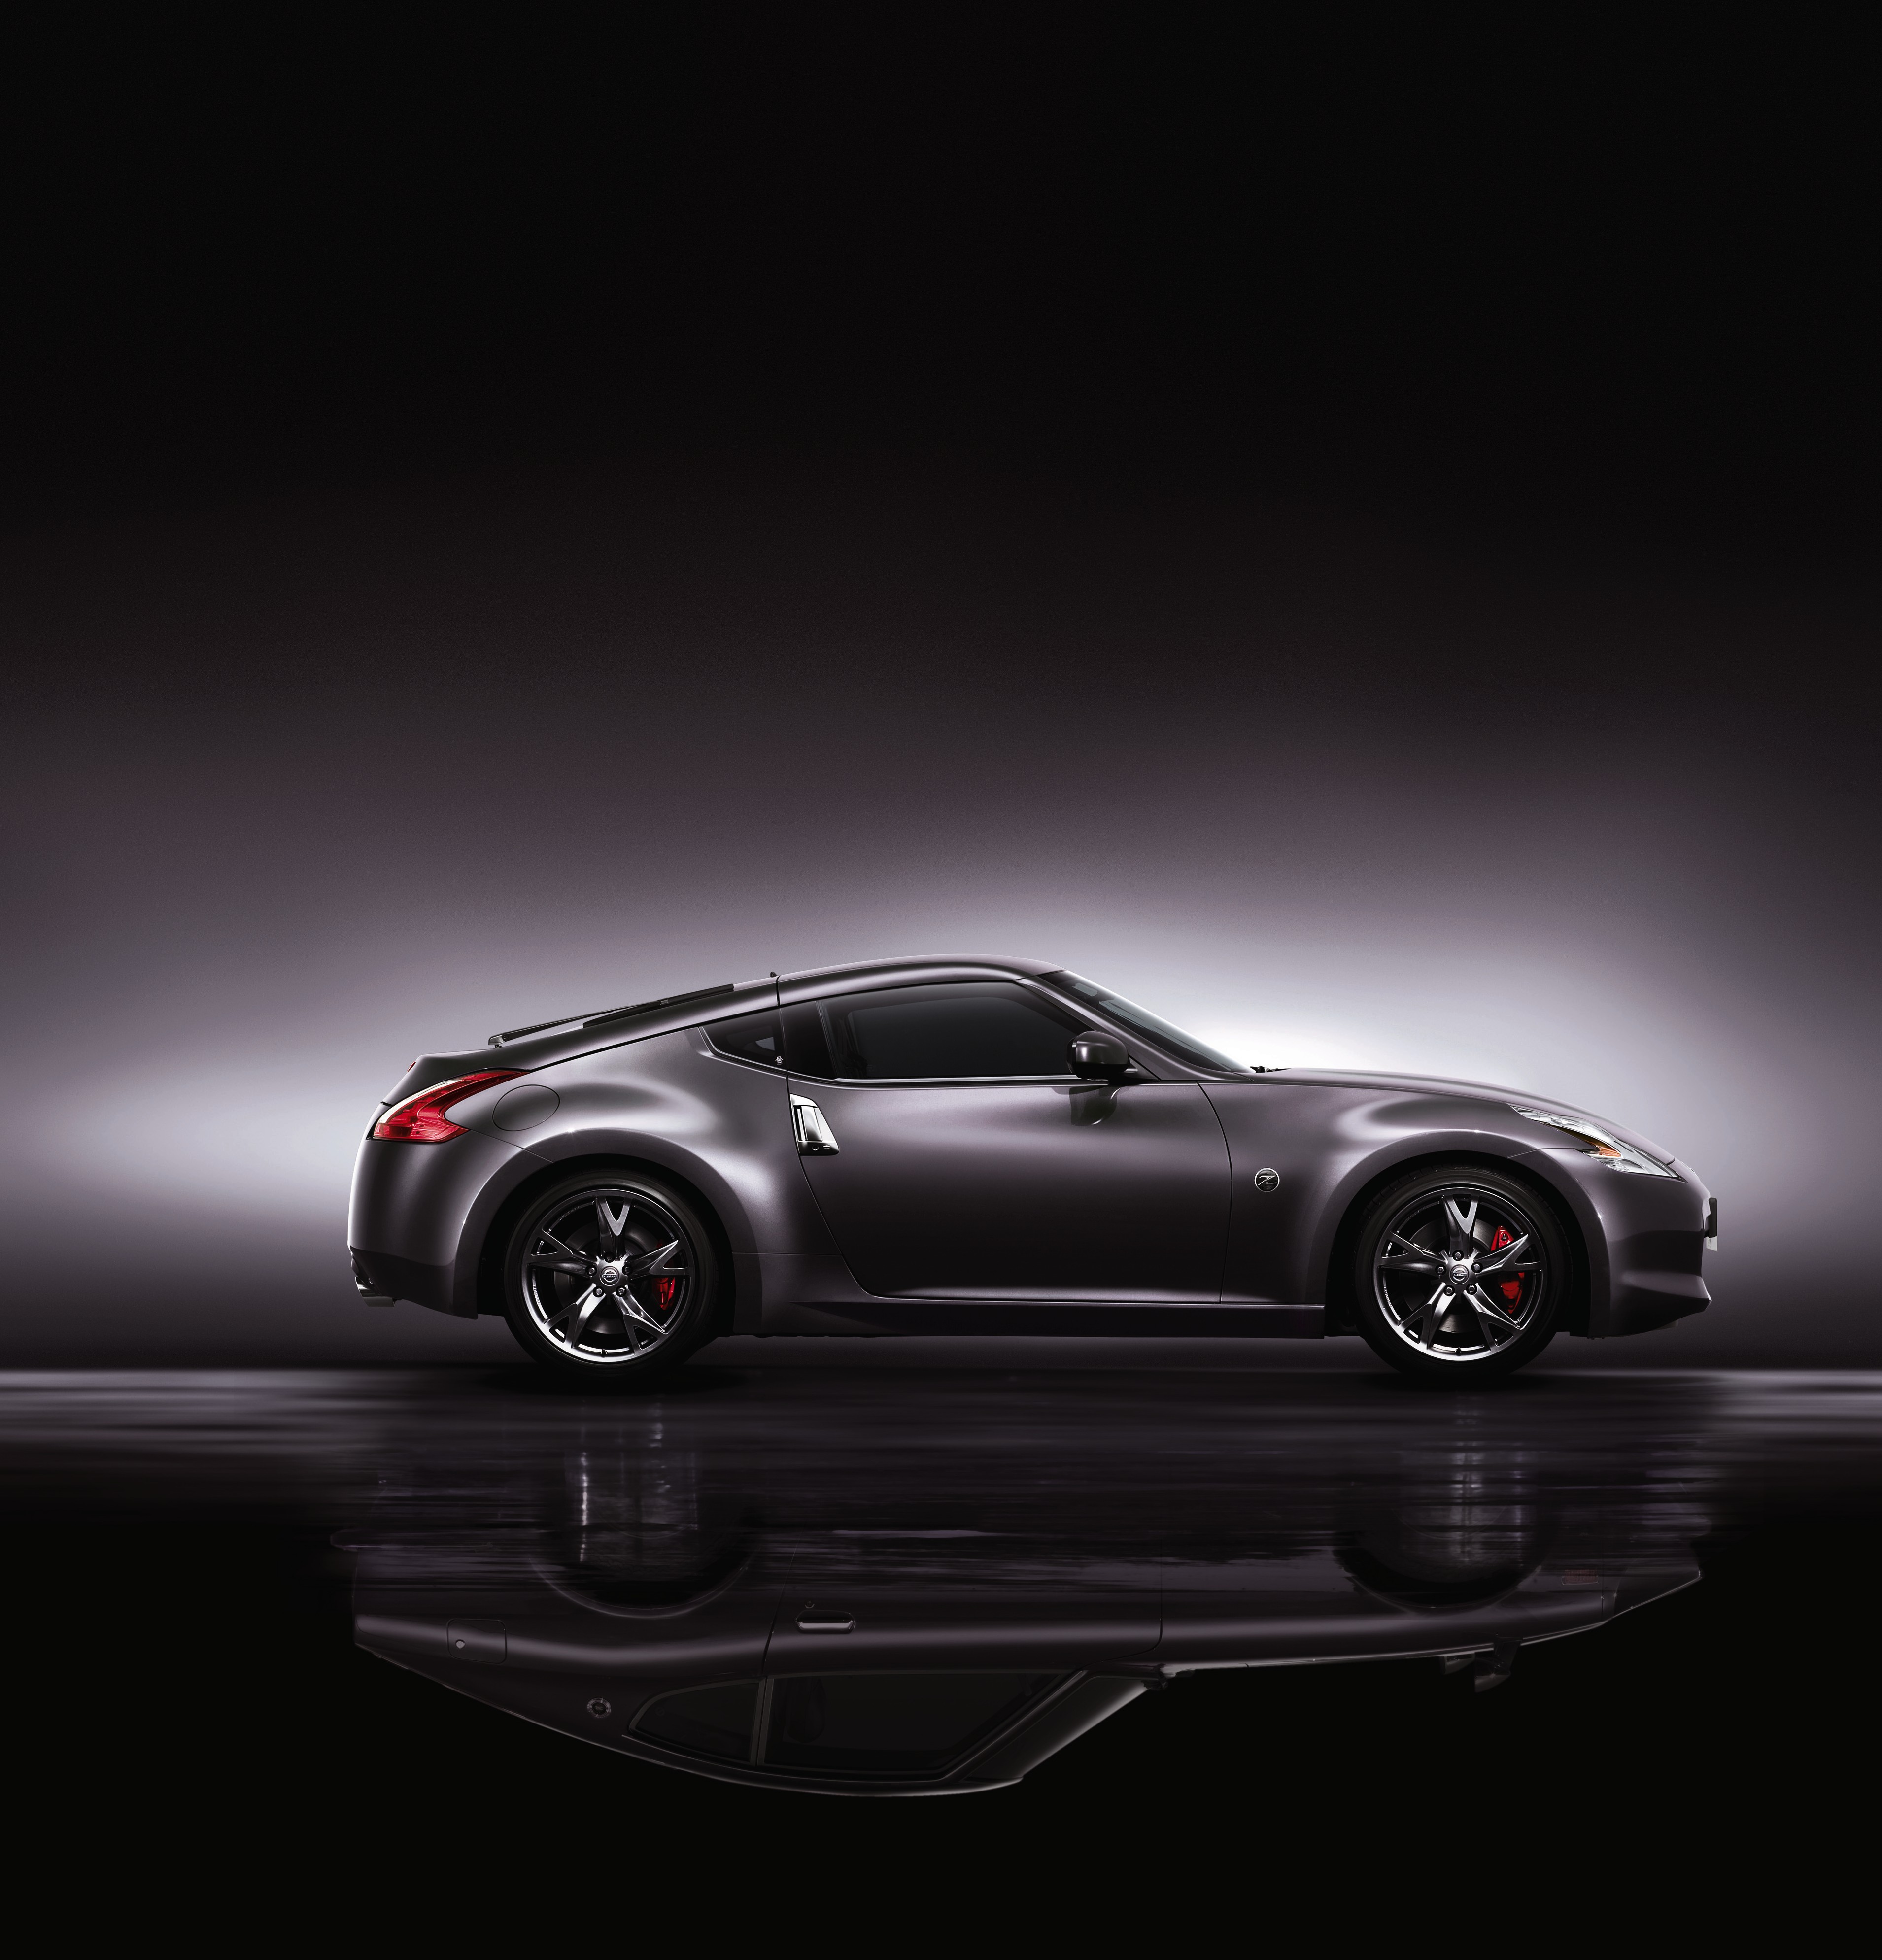 cars, vehicles, Nissan 370Z - desktop wallpaper